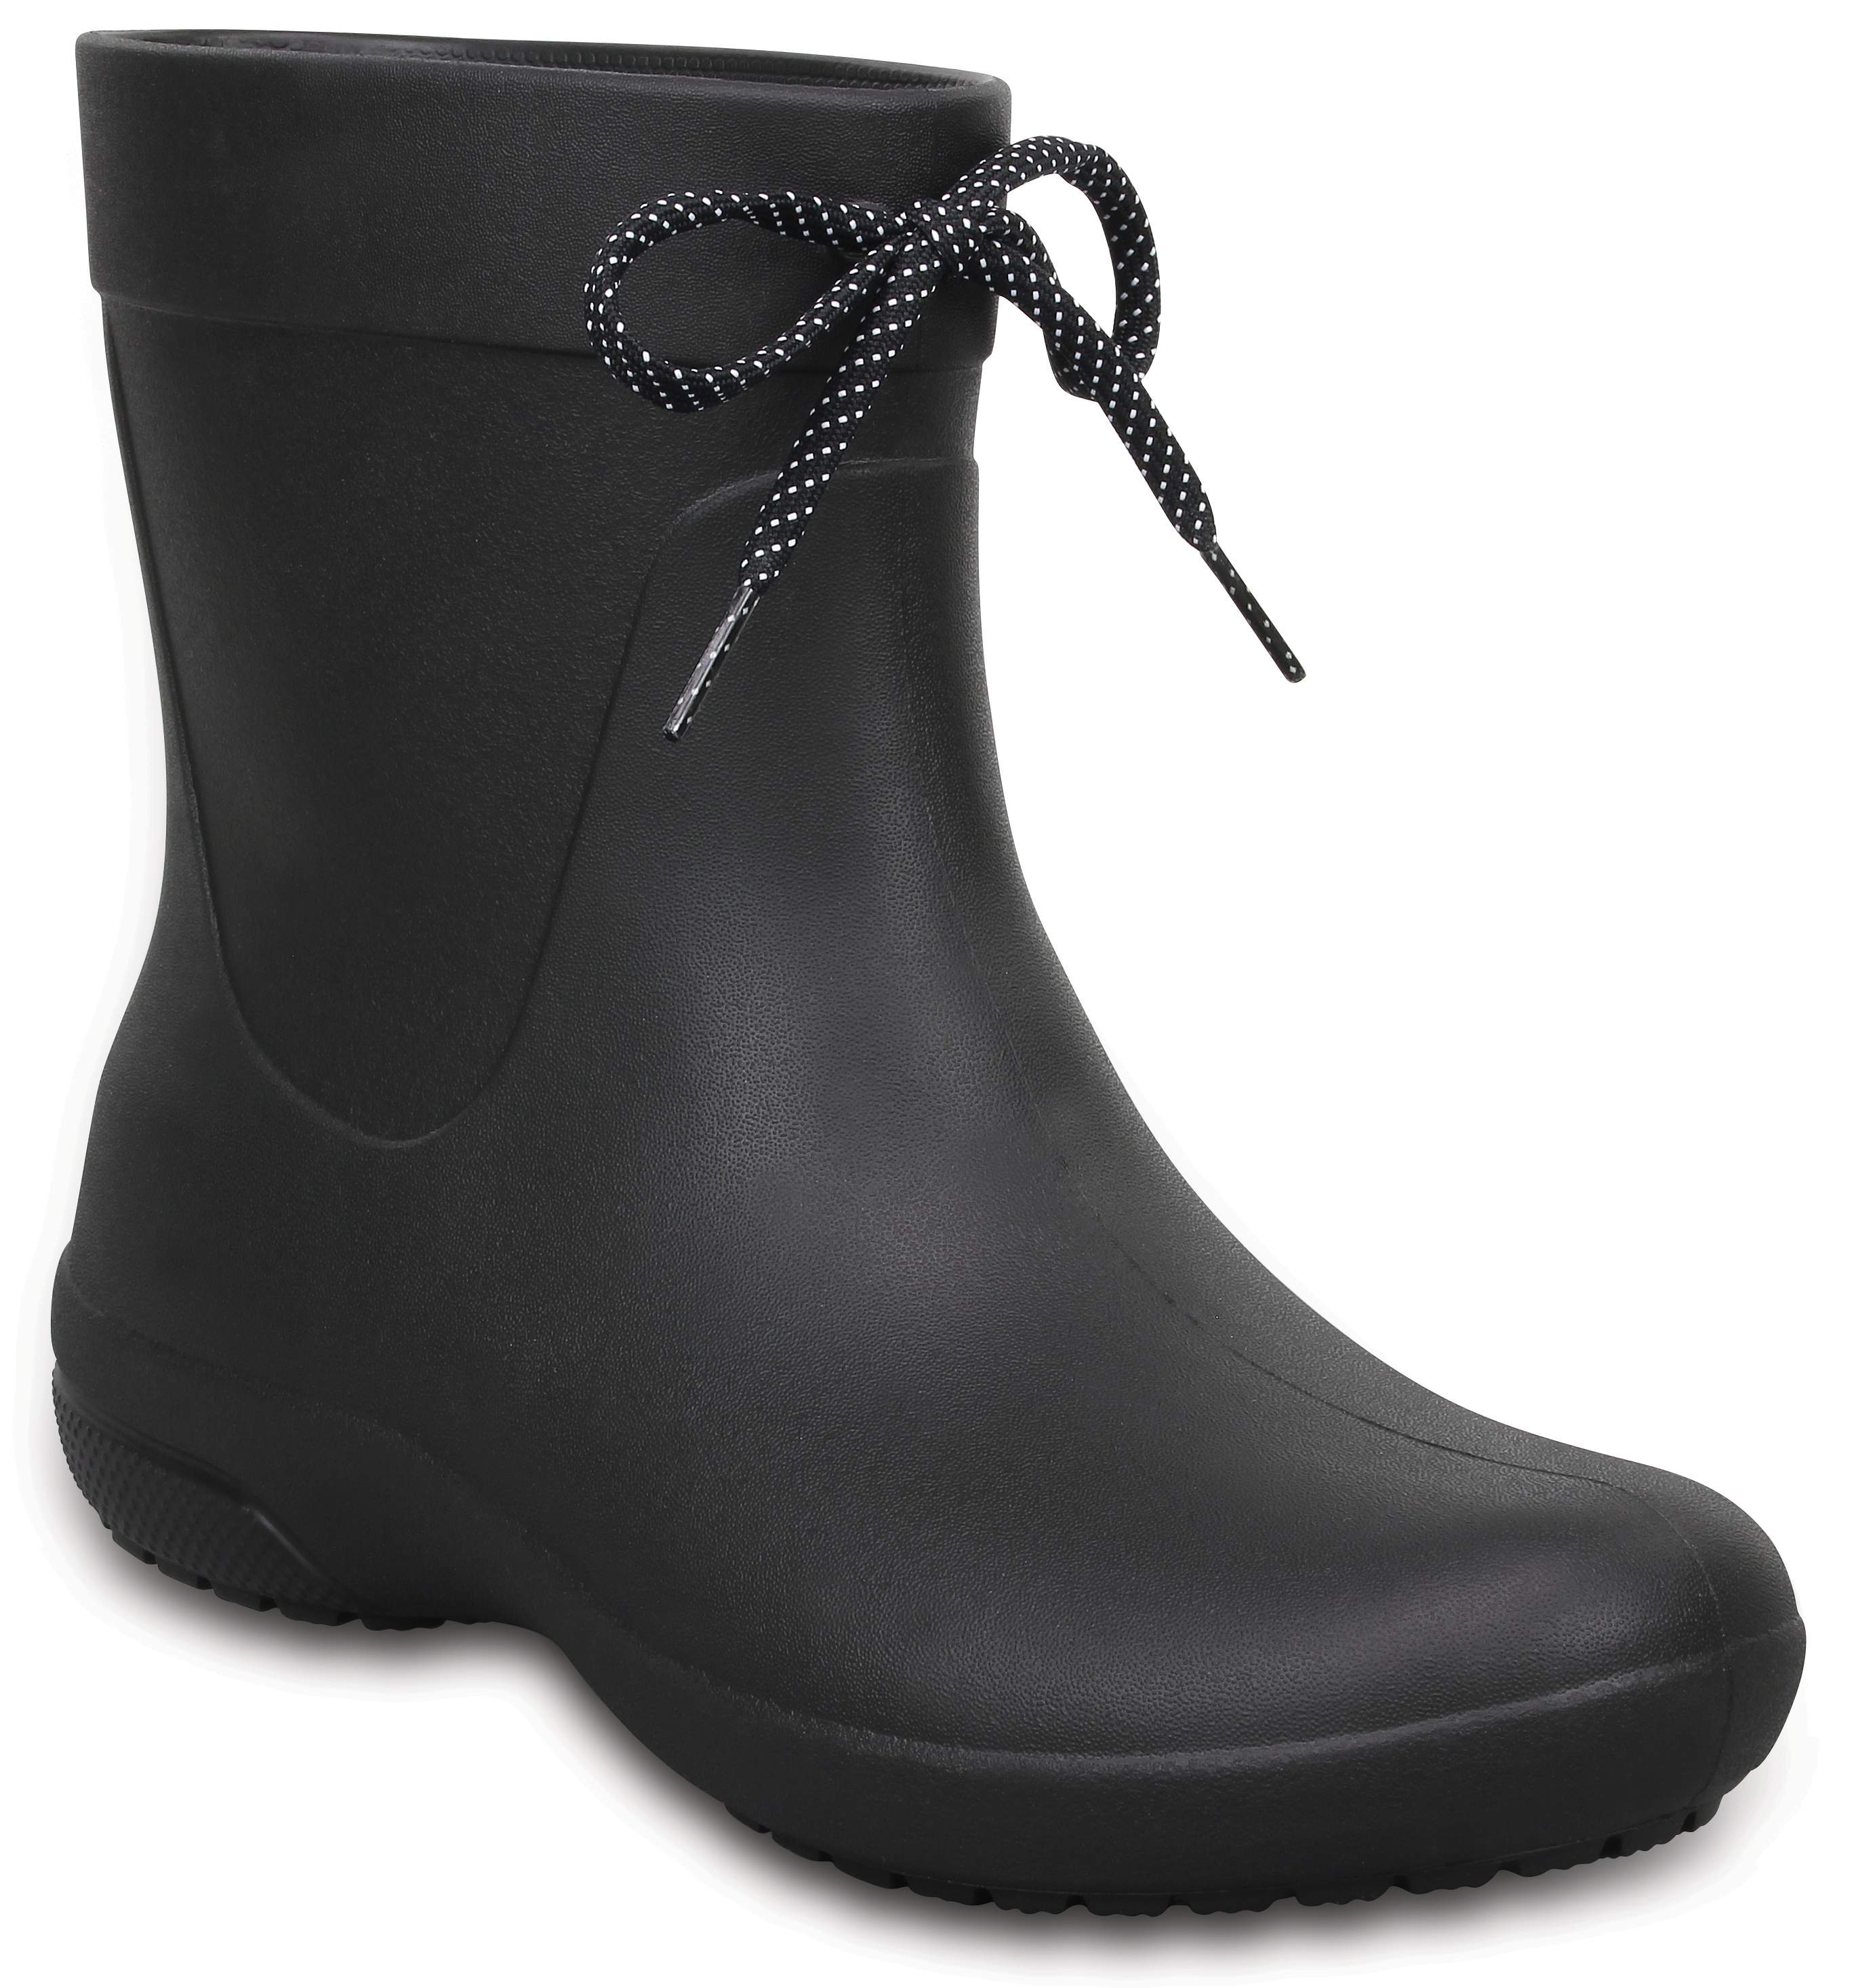 crocs shorty rain boots